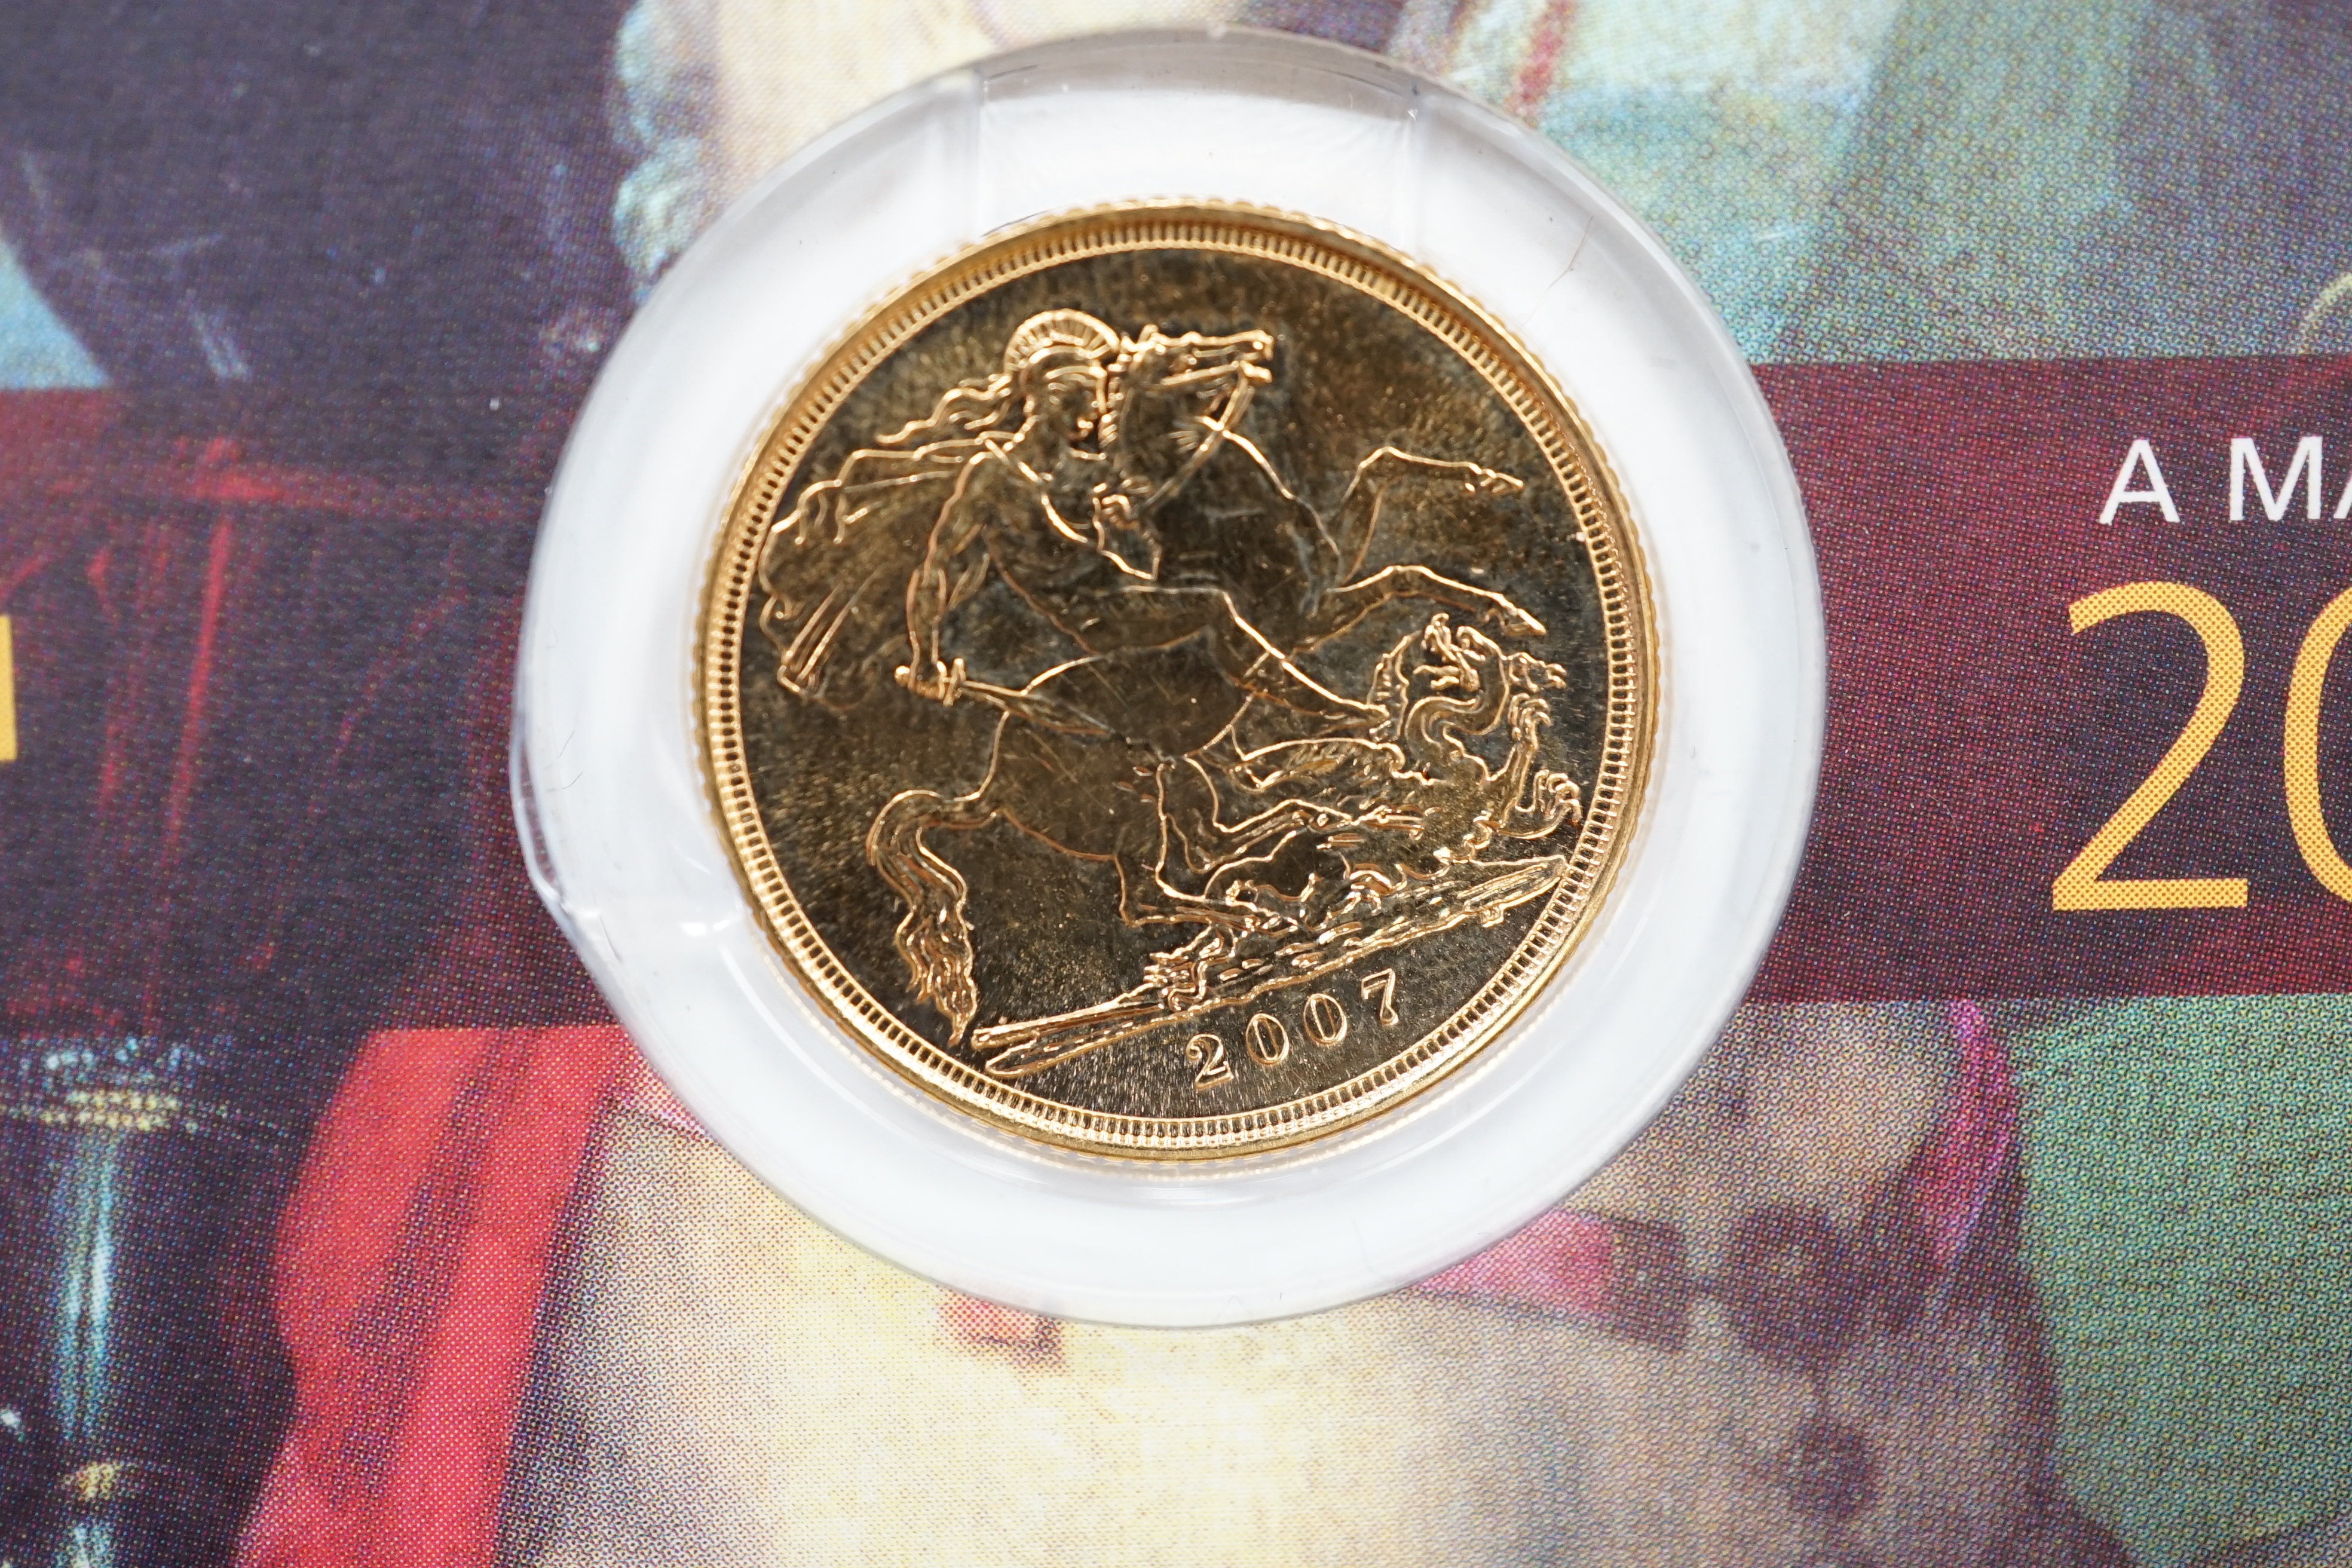 British gold coins, Elizabeth II, 2007 Gold bullion sovereign St. George & The Dragon, BUNC, Royal Mint card